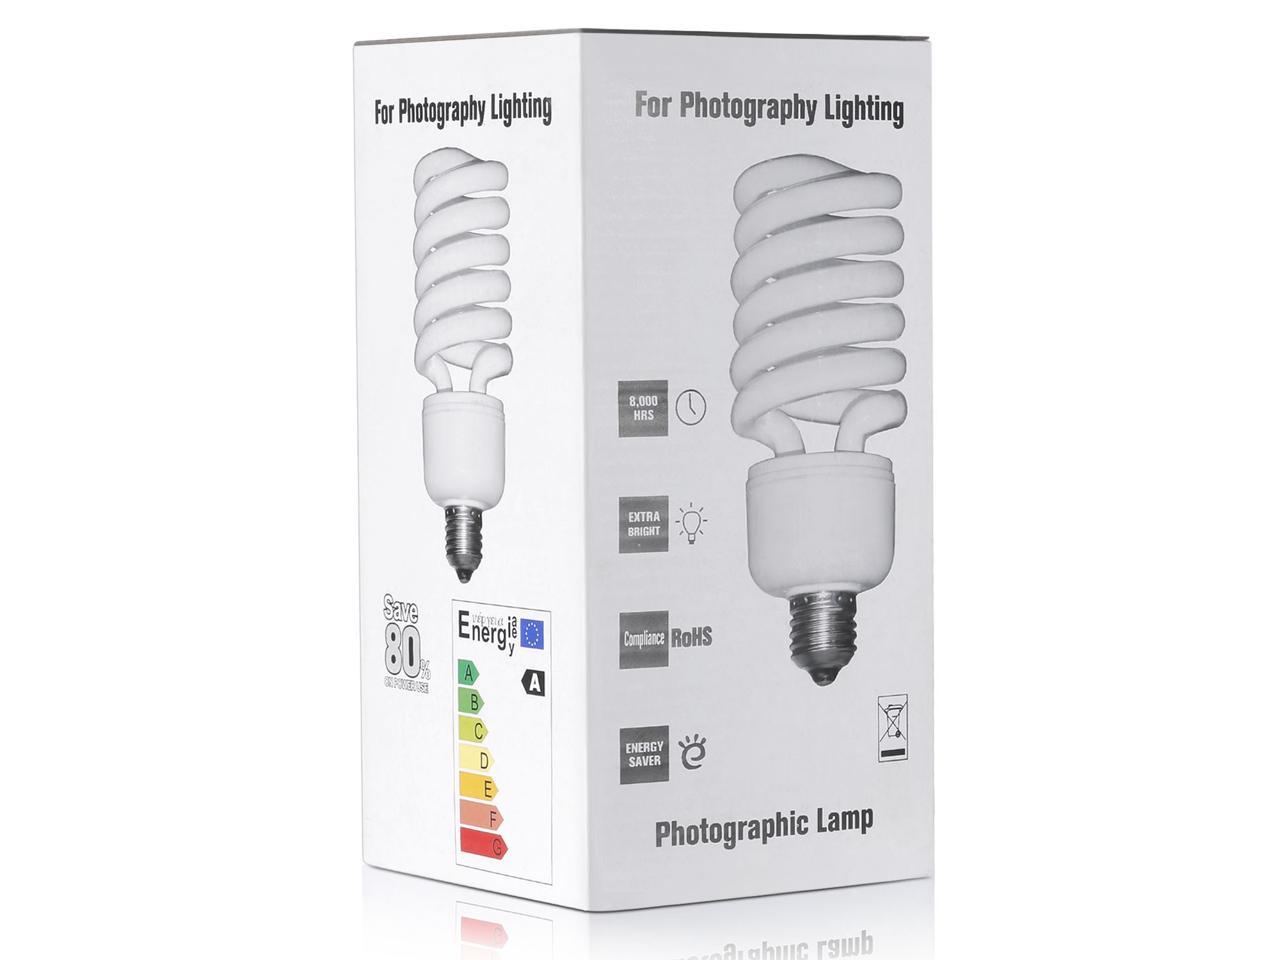 Neewer 85W 110V 5500K Tri-Phosphor Spiral CFL Daylight Balanced Light Bulb in E27 Socket for Photo and Video Studio Lighting 85W 